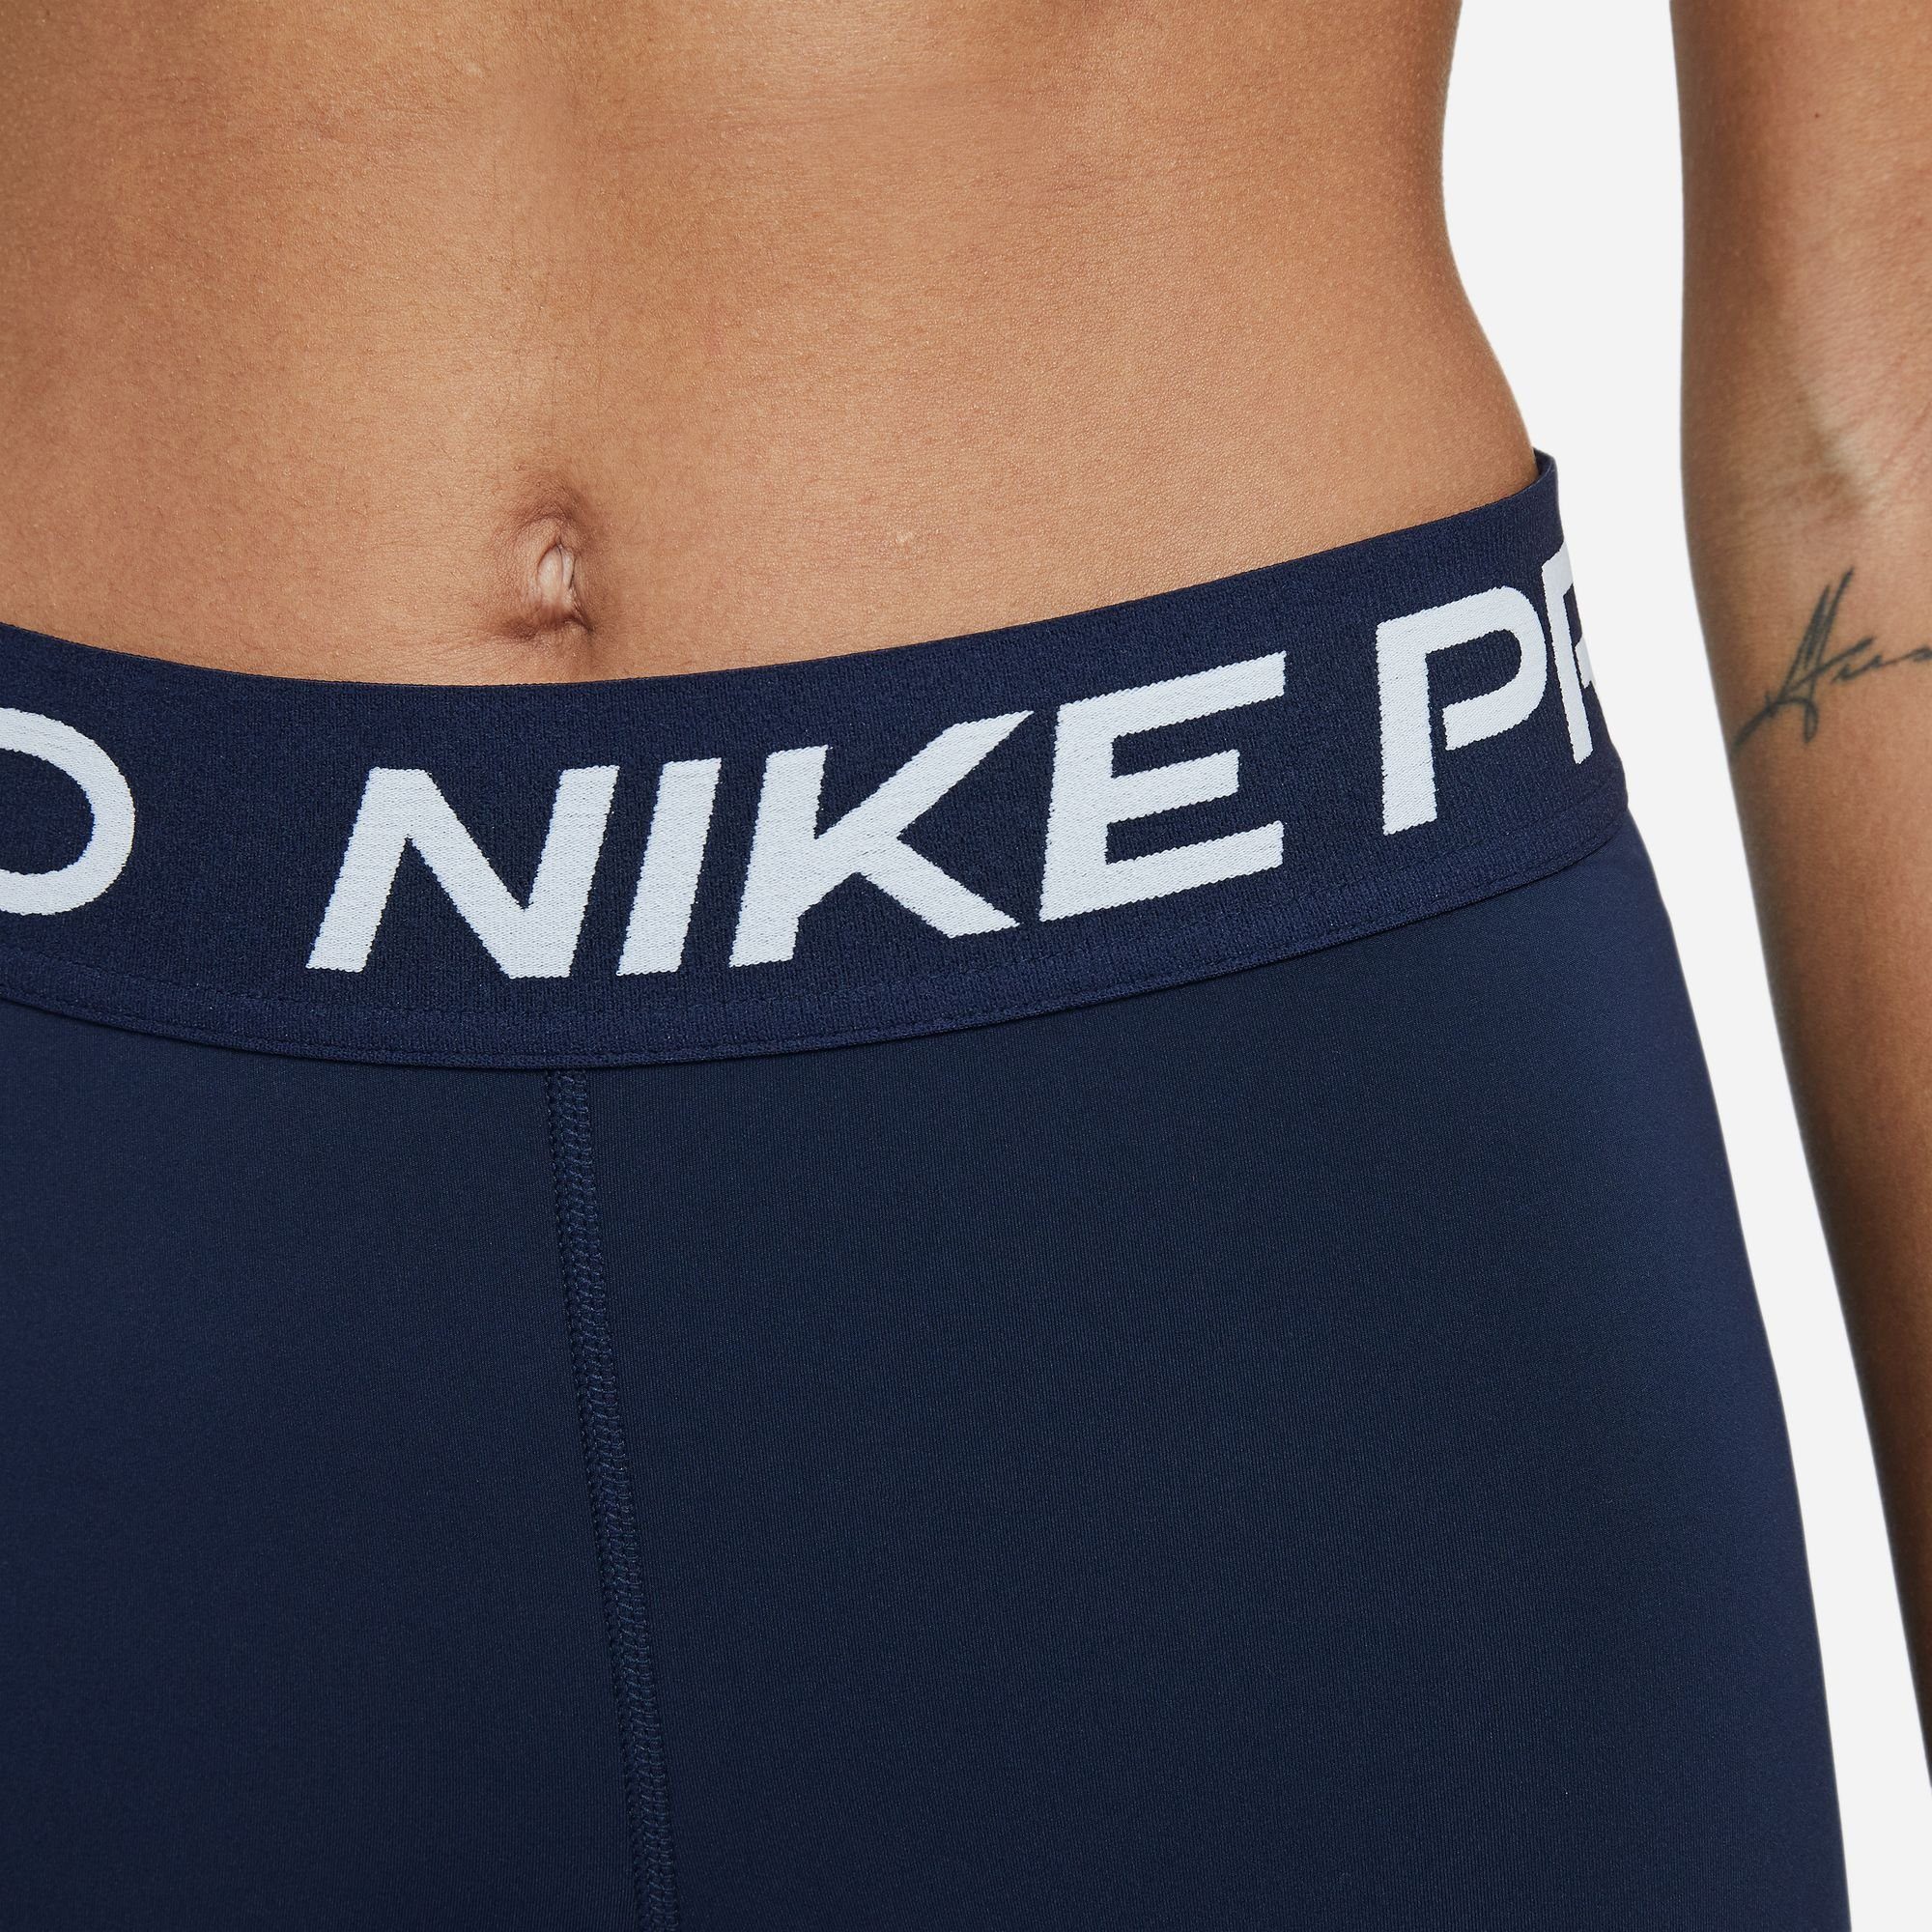 Nike SHORTS OBSIDIAN/WHITE Trainingstights PRO WOMEN'S